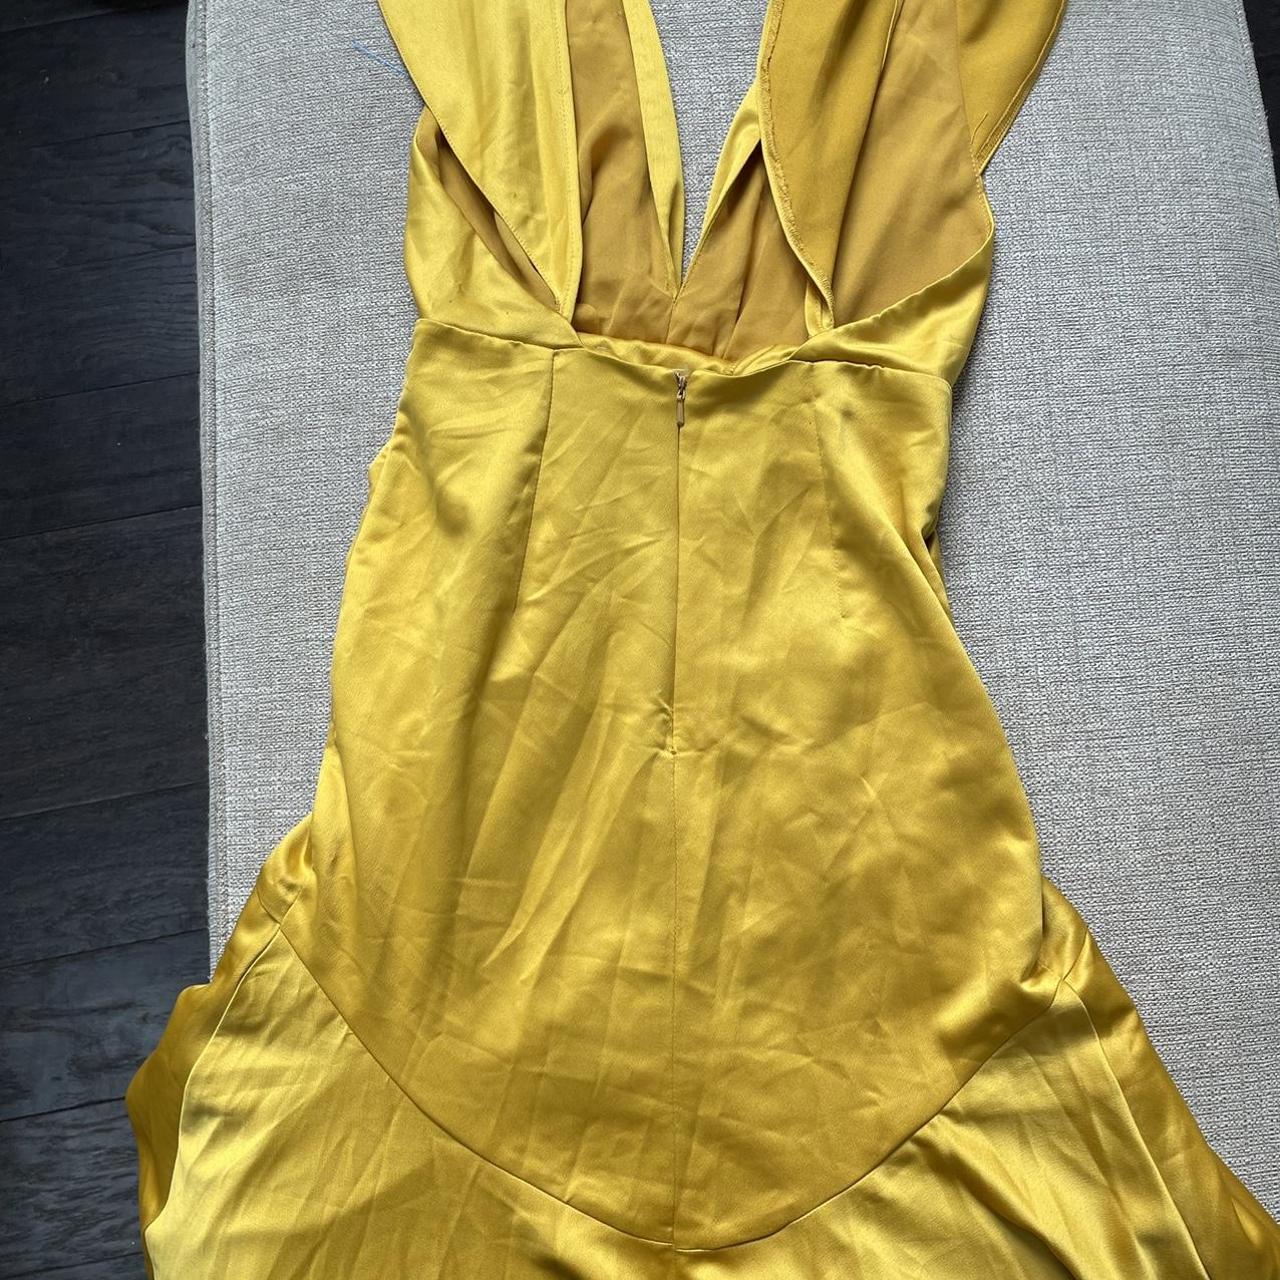 ASOS Women's Yellow and Gold Dress (2)